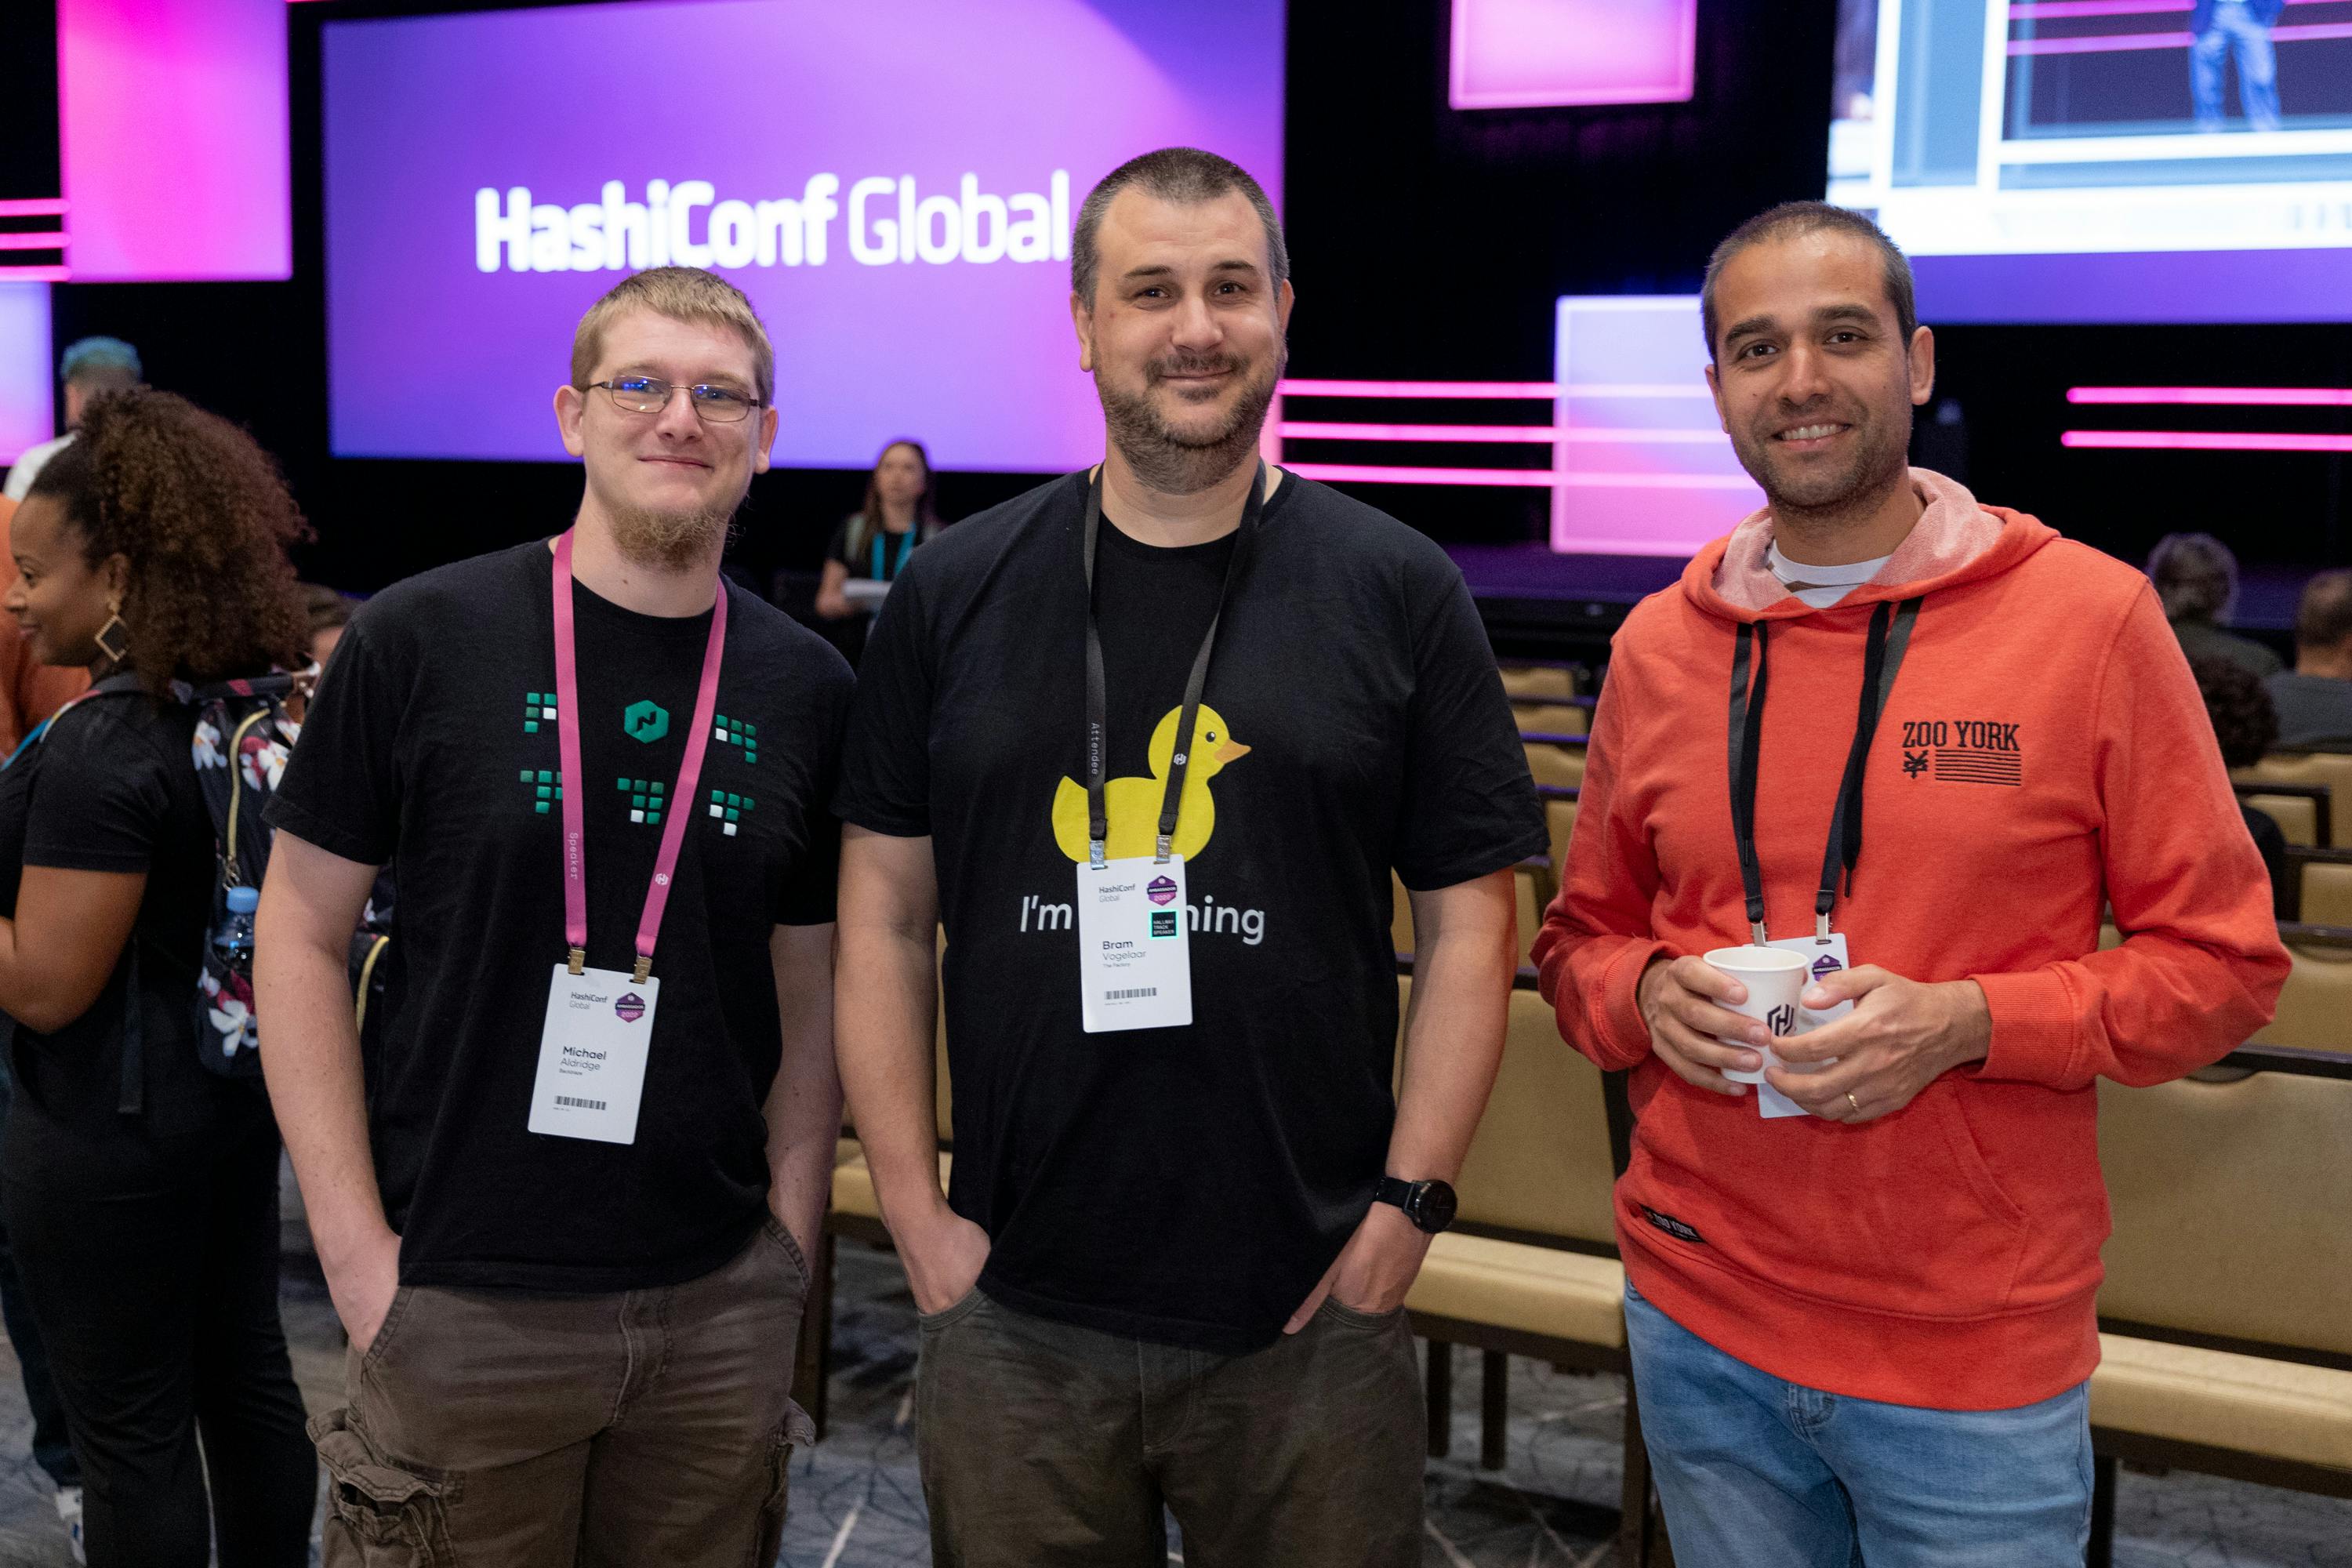 Michael Aldridge, Bram Vogelaar and Nico Singh at HashiConf Global